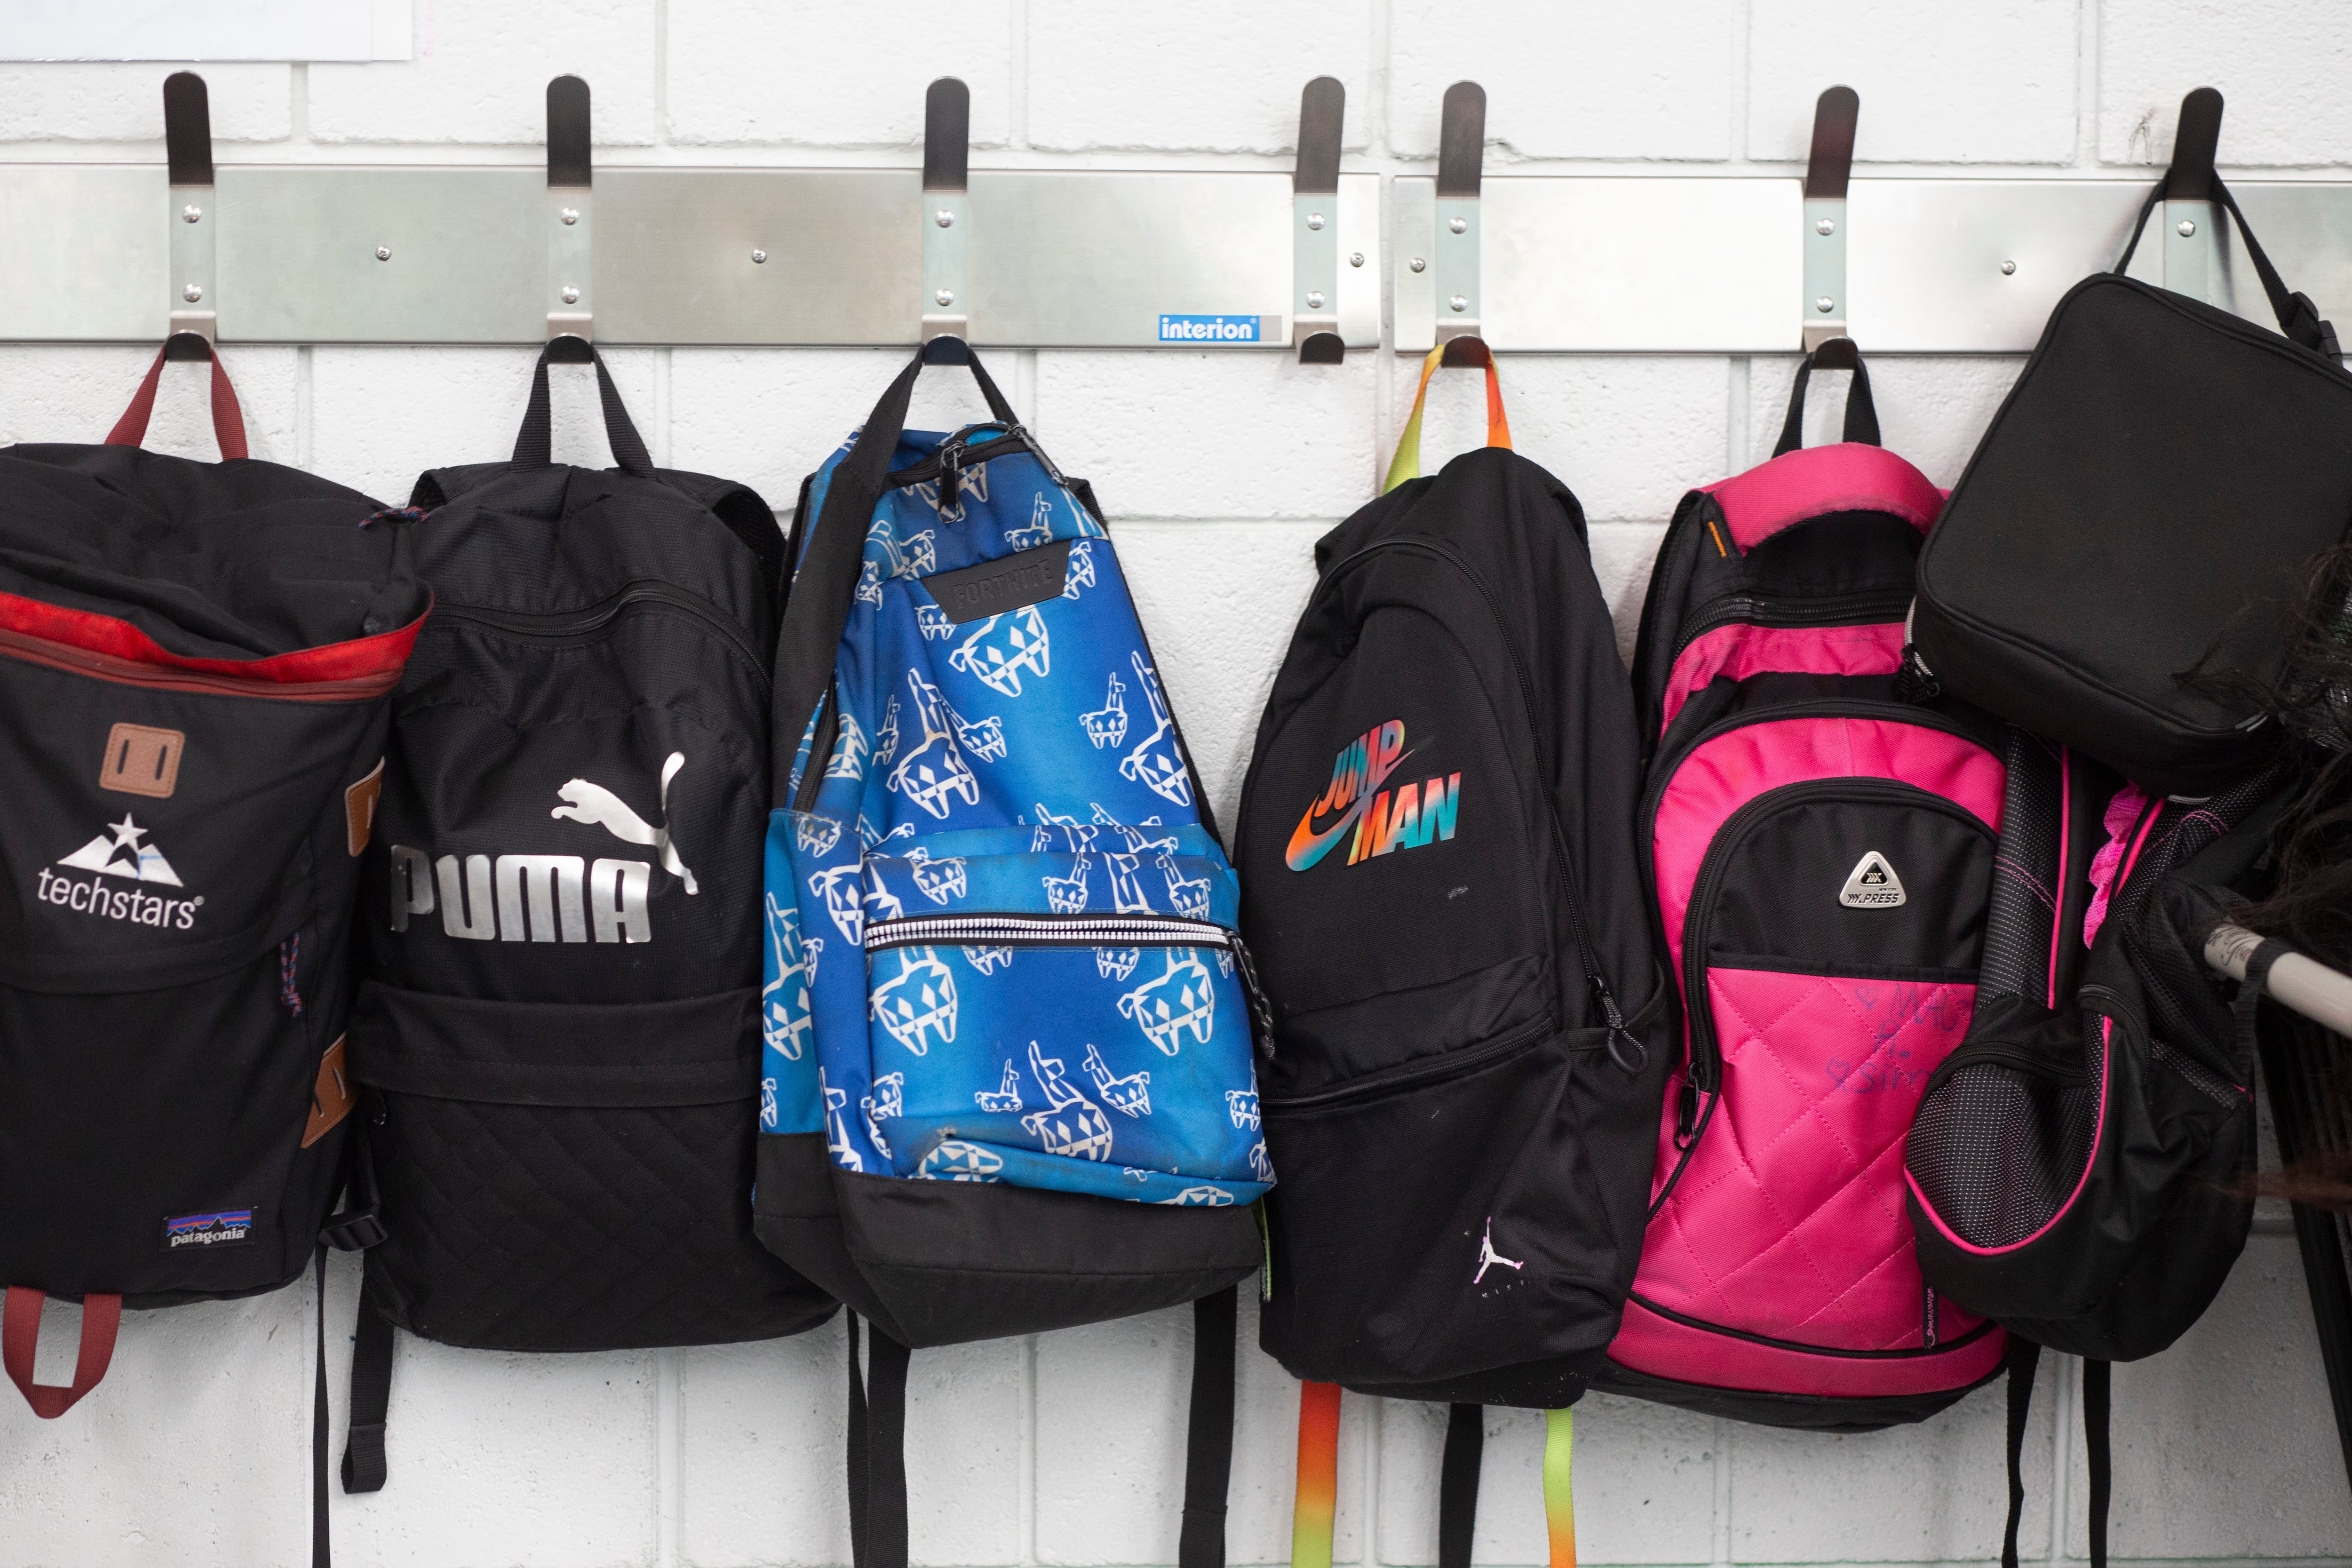 A row of backpacks hang on hooks.